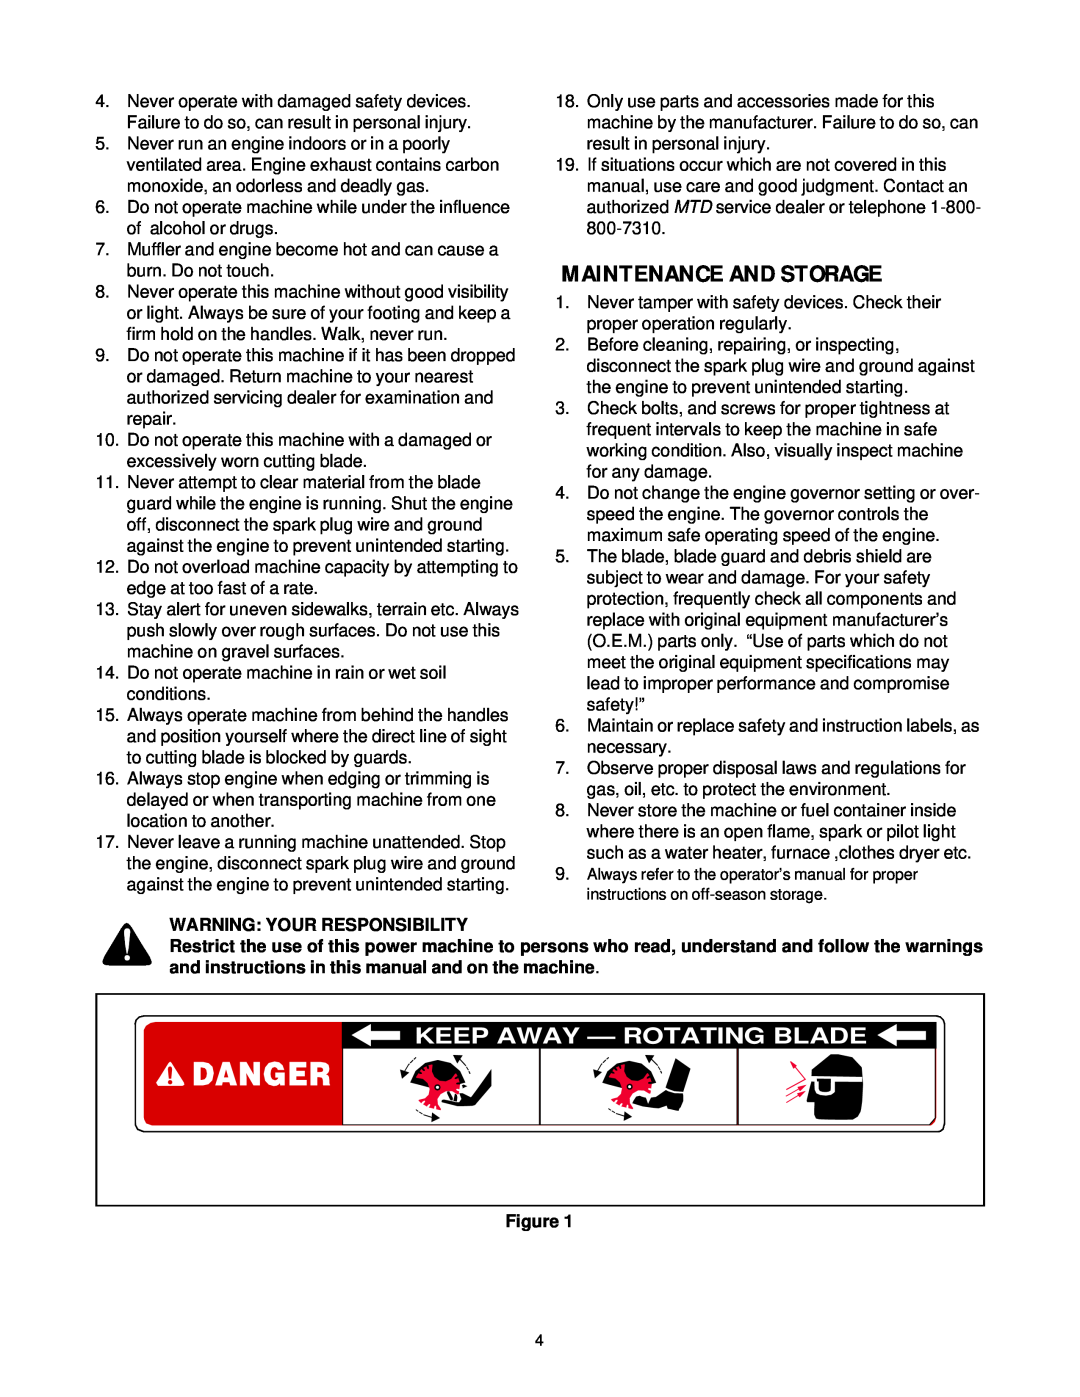 Briggs & Stratton 592 manual Maintenance And Storage, Warning Your Responsibility, Keep Away - Rotating Blade 